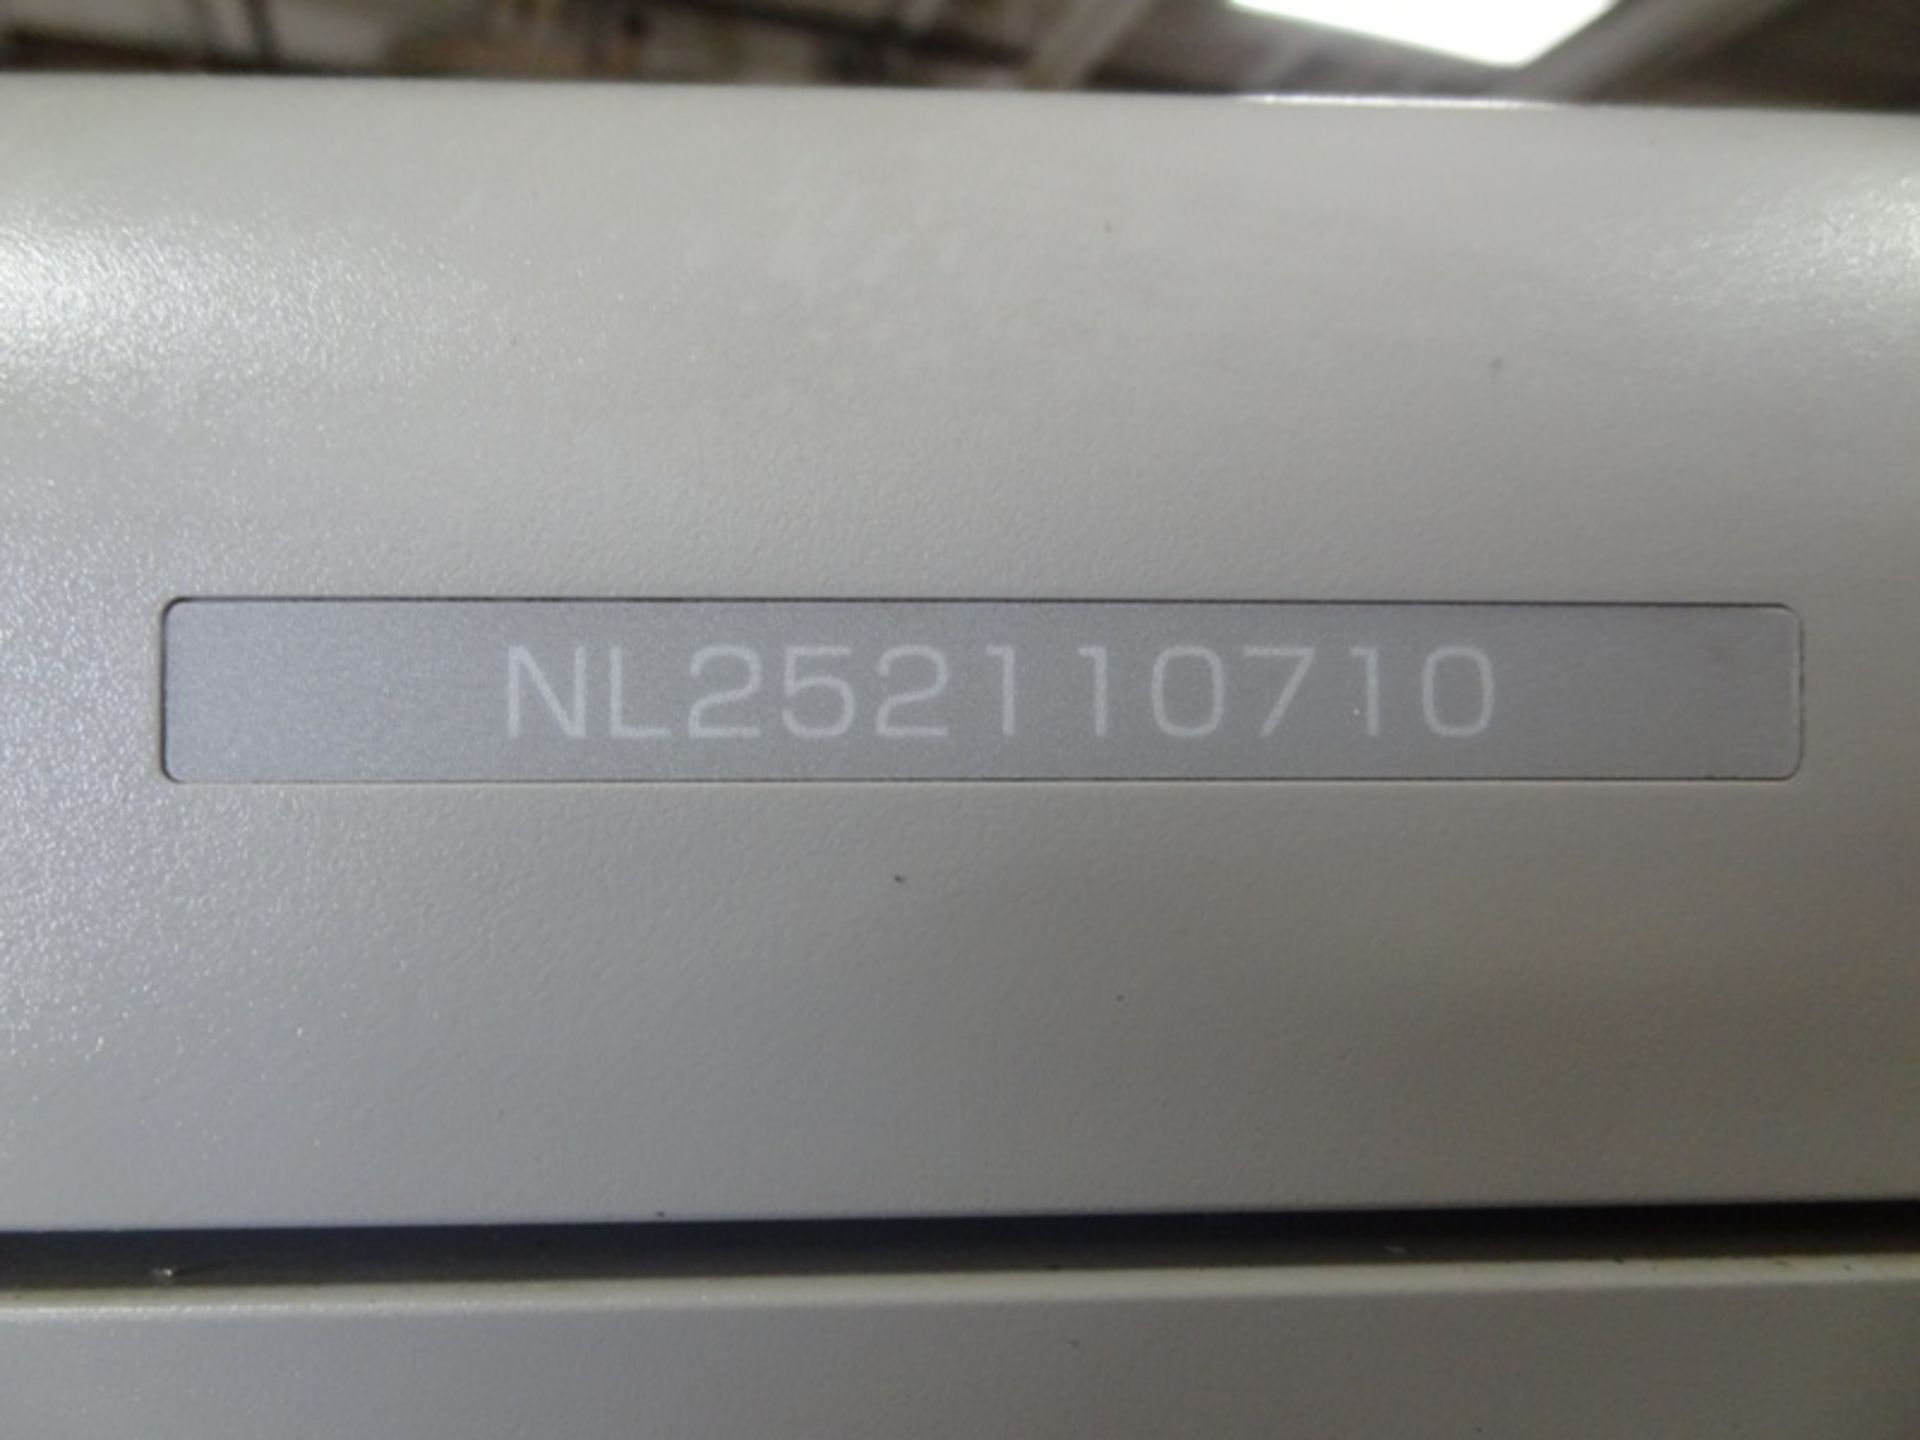 MORI SEIKI NLX 2500/700 CNC LATHE WITH PARTS CATCHER. YEAR 2011, SN NL252110710, LOCATION MI - Image 6 of 18